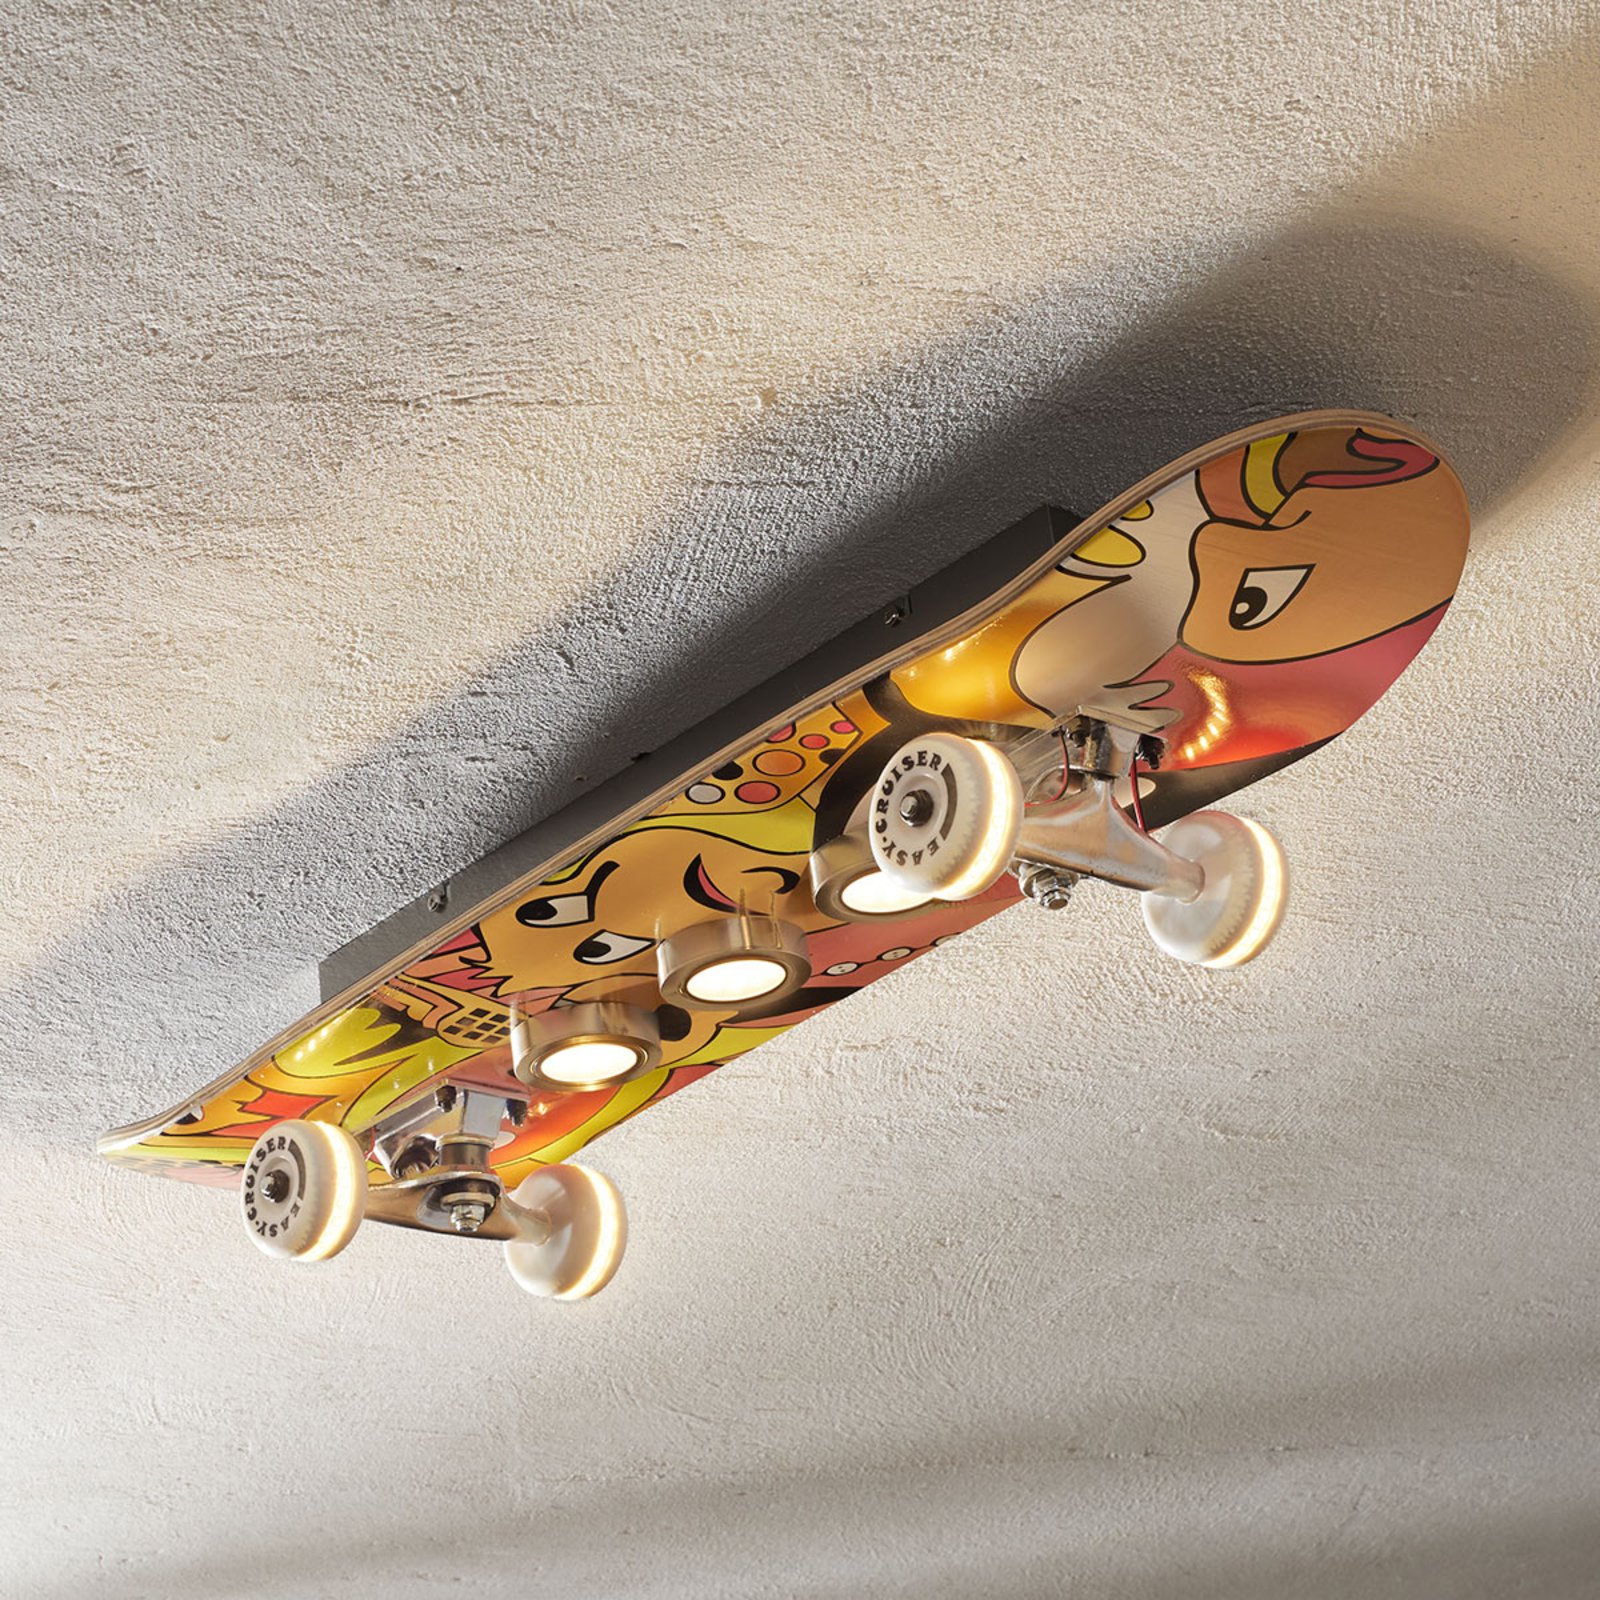 Lampa sufitowa LED Easy Cruiser wygląd Skateboardu